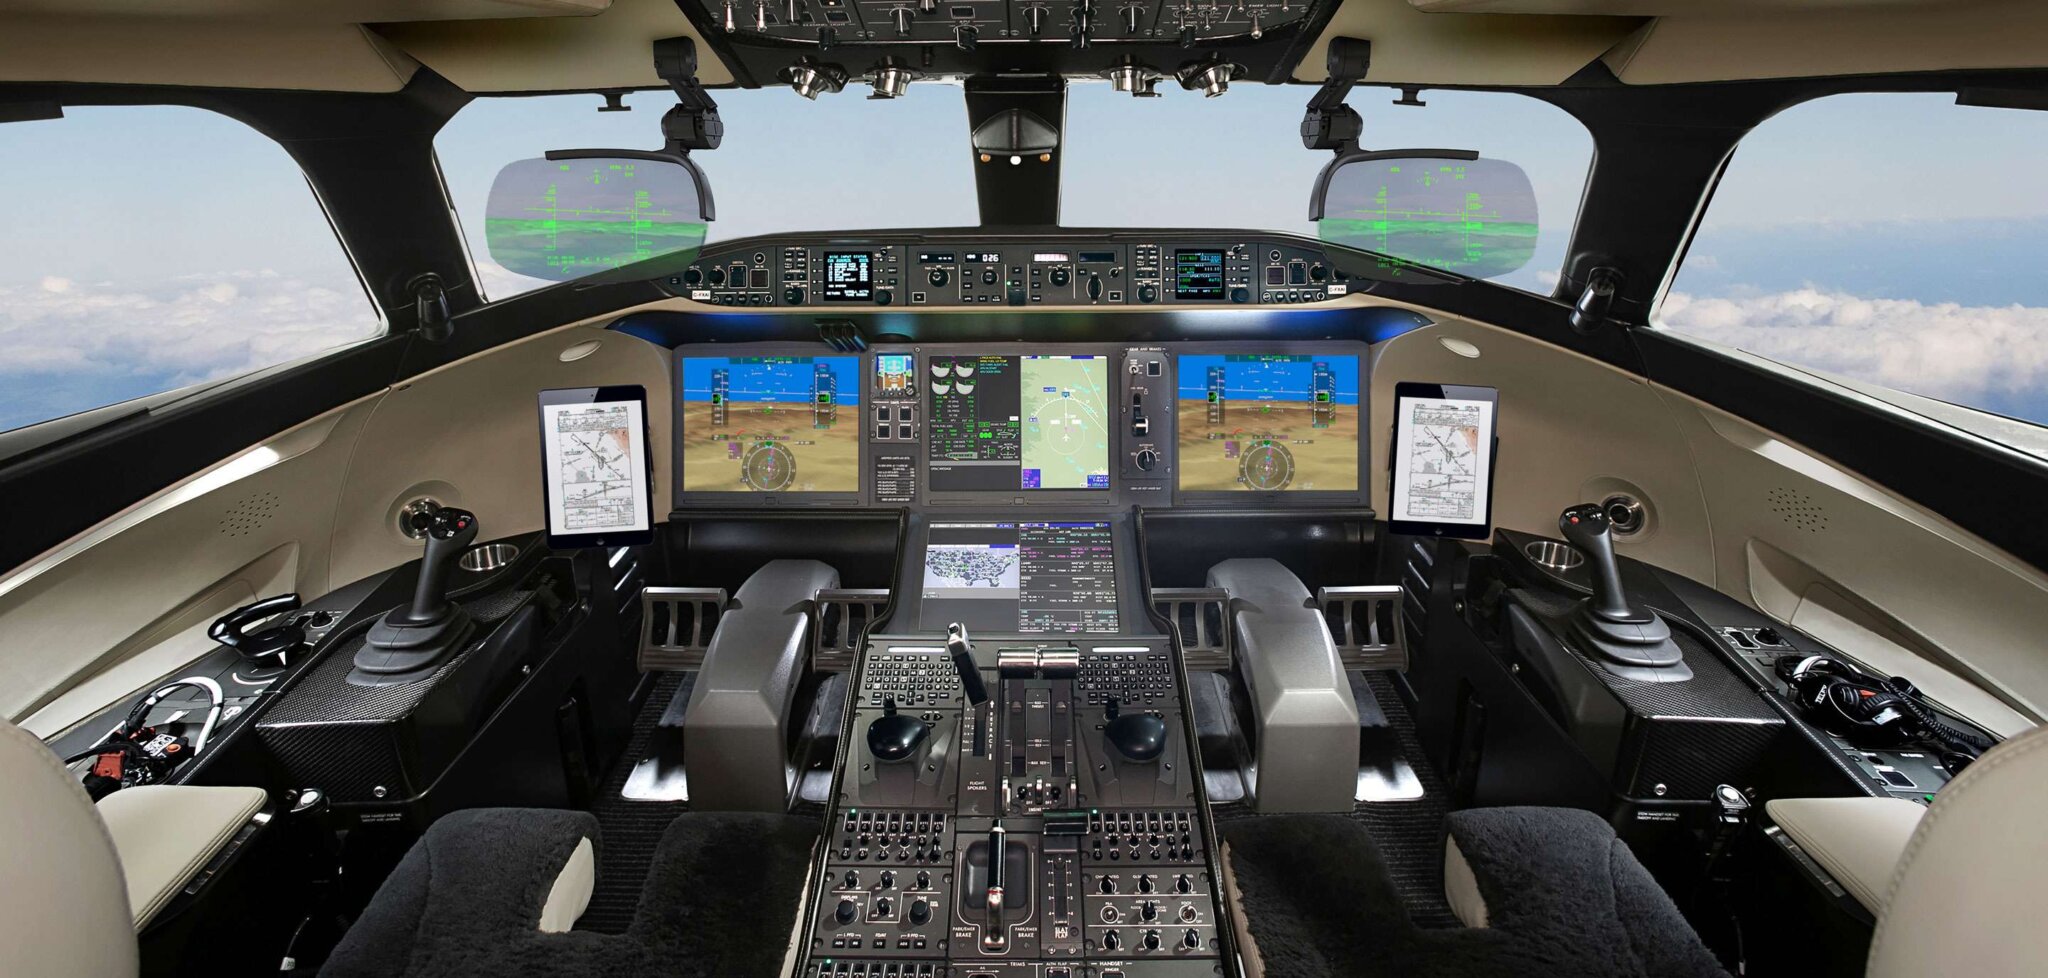 Bombardier introduces advanced avionics upgrade for Bombardier vision flight deck